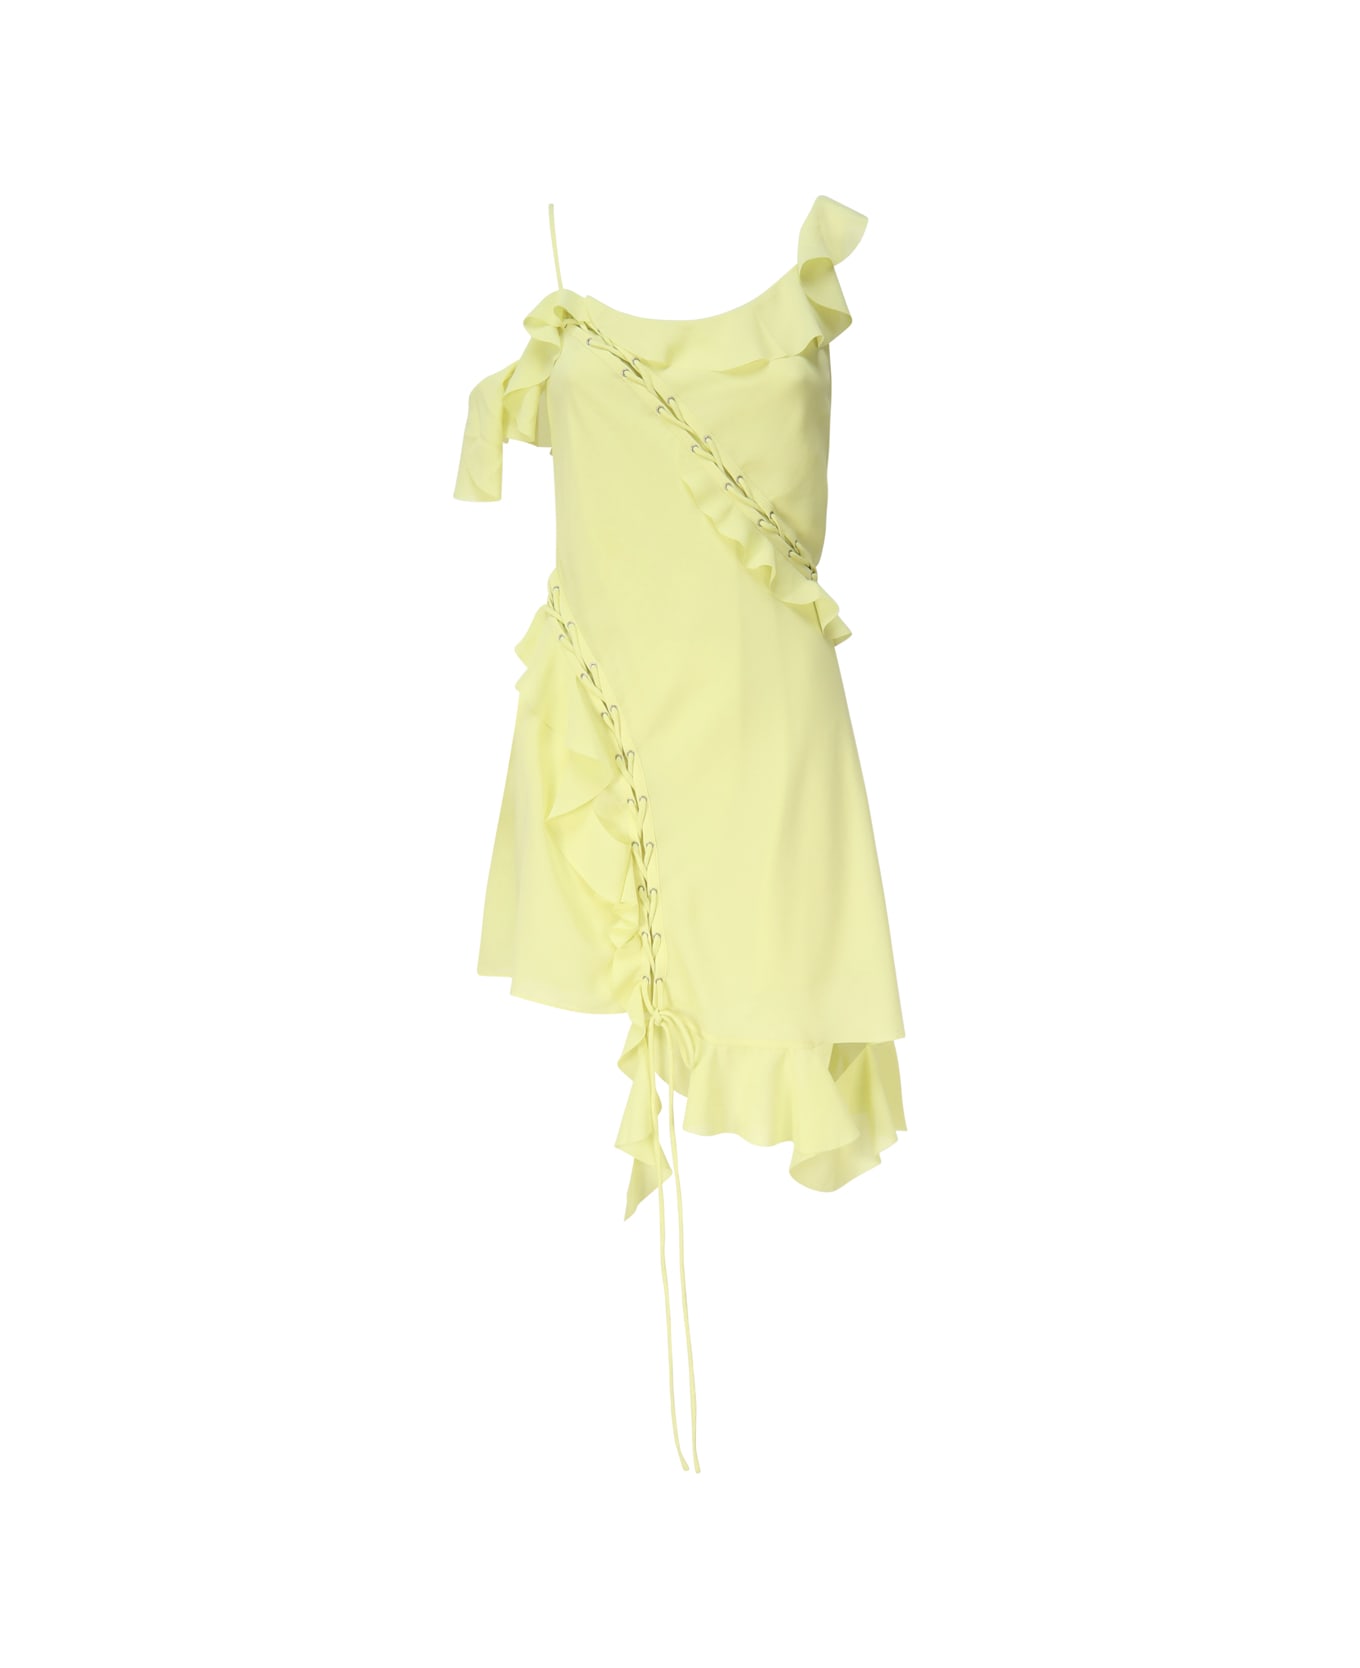 Acne Studios Asymmetrical Ruffle Dress - Acid yellow